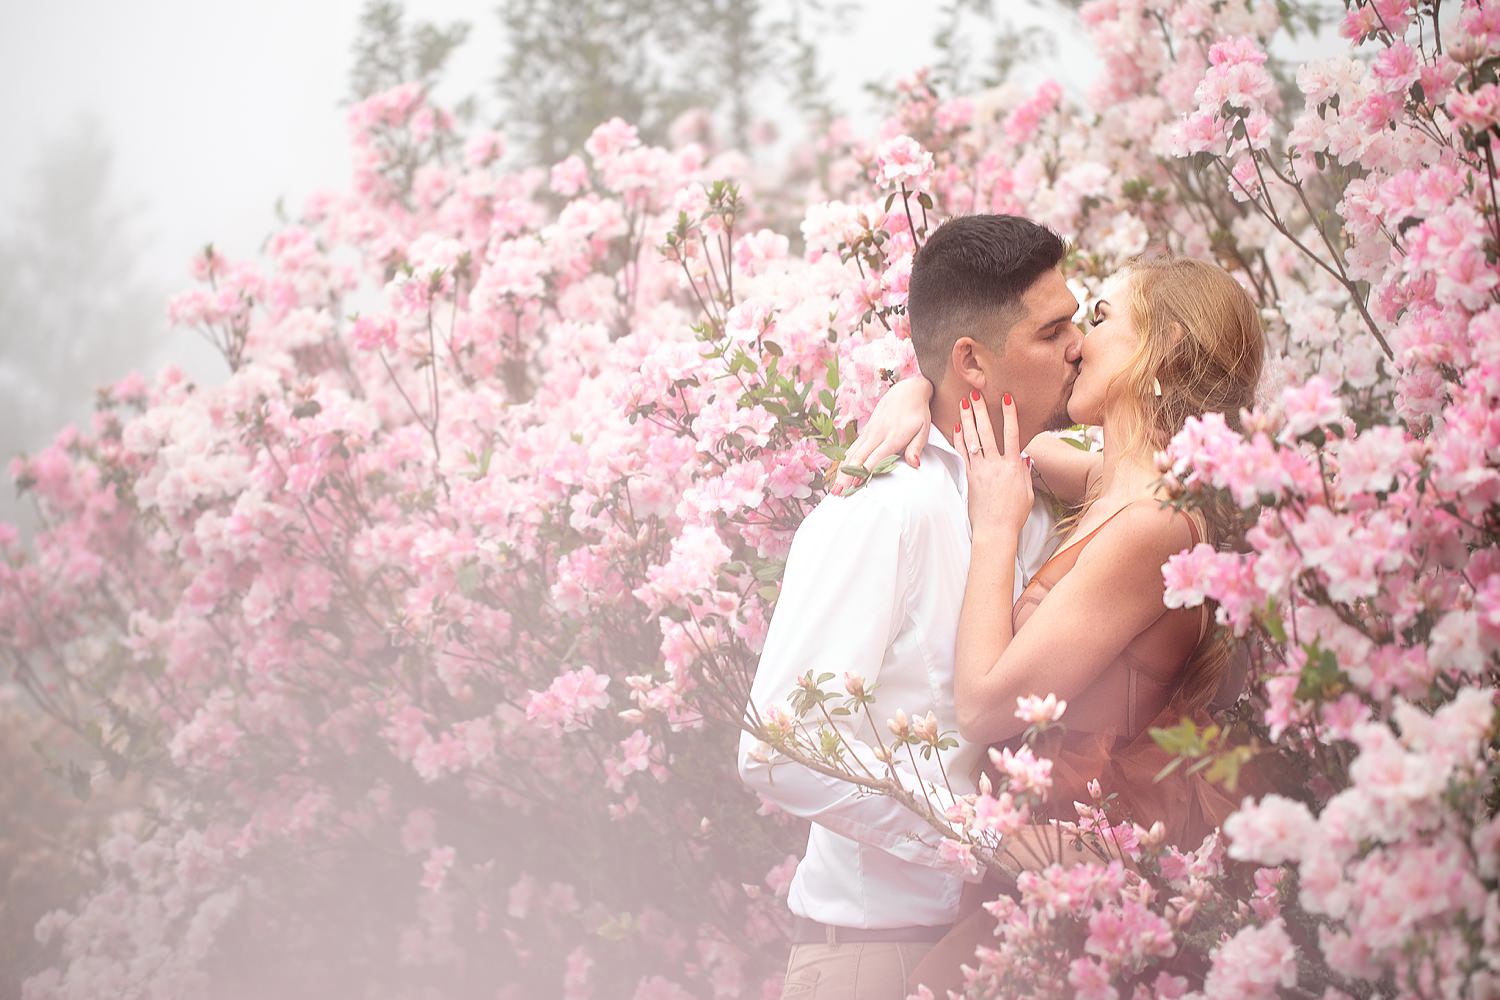 Pink Azaleas at Cheerio Gardens surround the wedding couple as they kiss